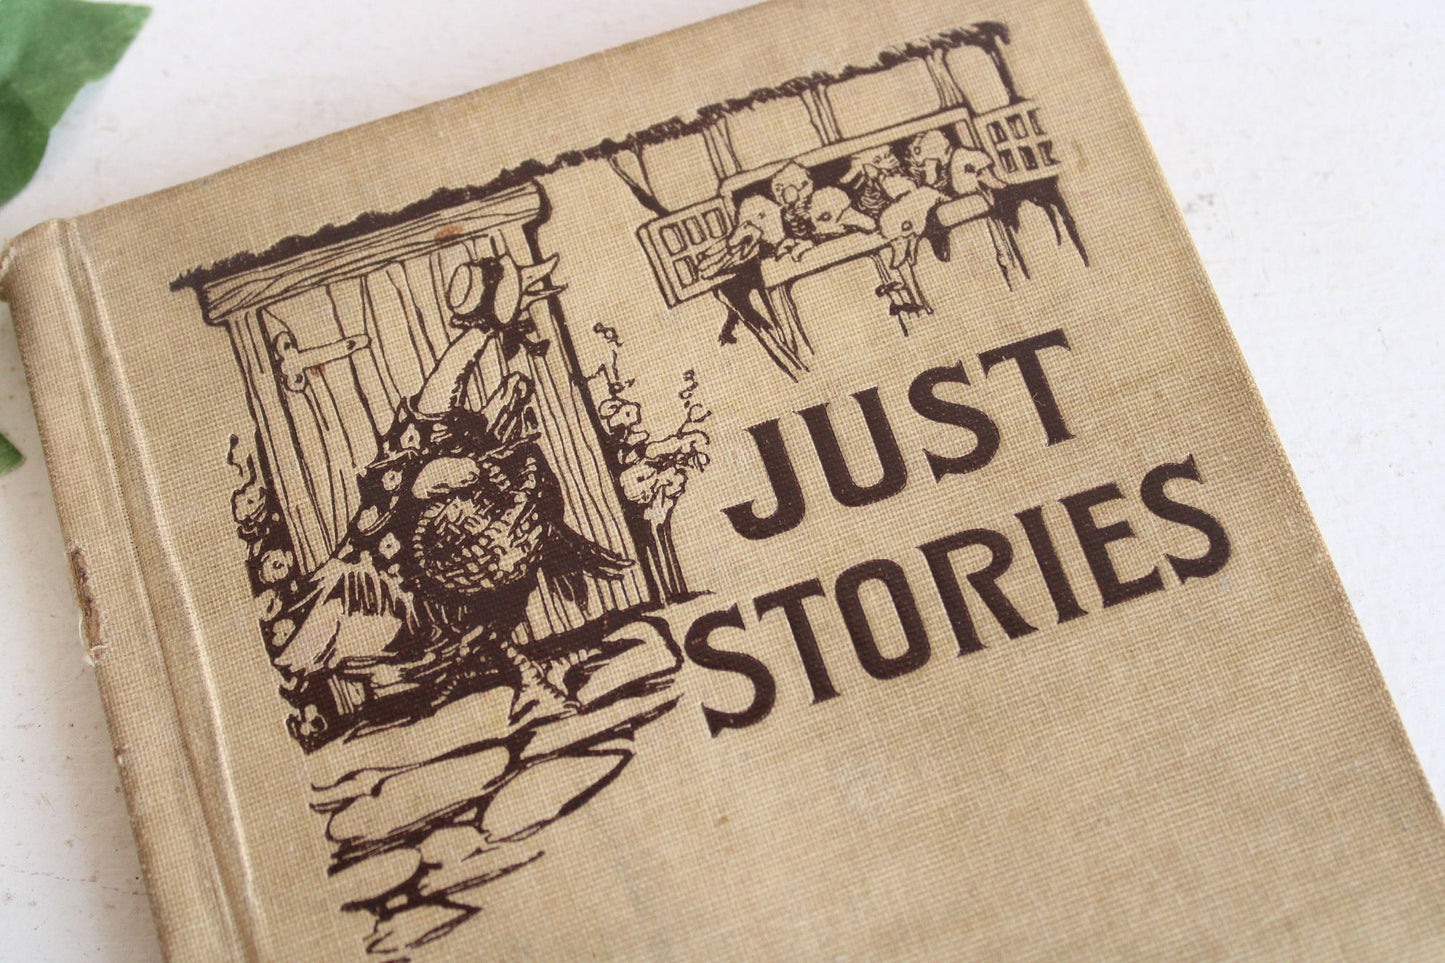 Vintage 1910s Book, "Just Stories" by Annie Klingensmith, Illustrated Antique Children's Book, 1916